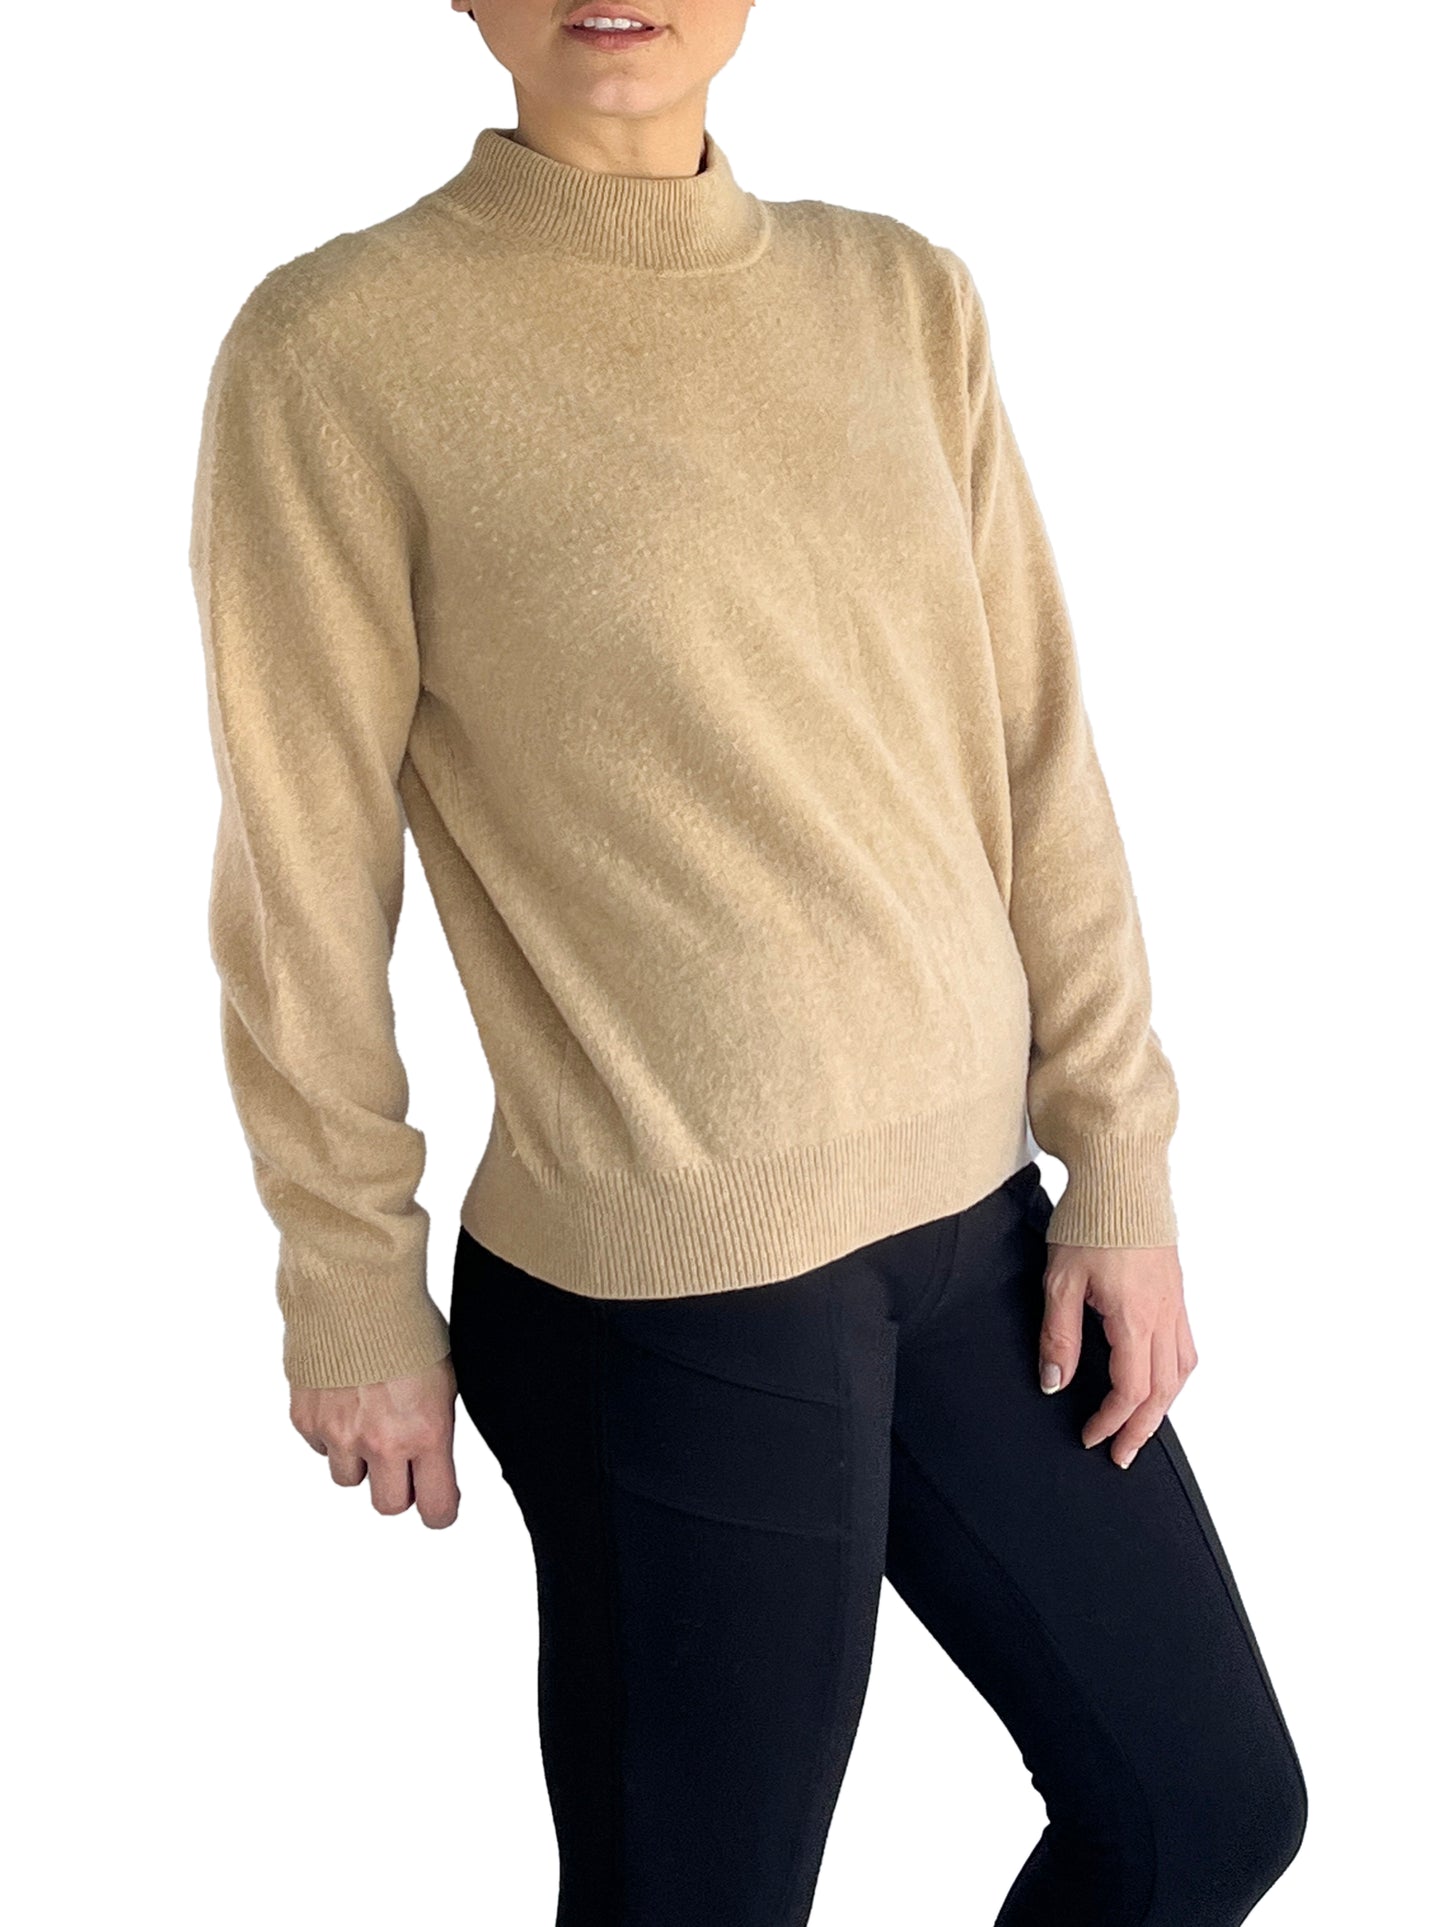 Top Sweater Tan Size S SKU 000044